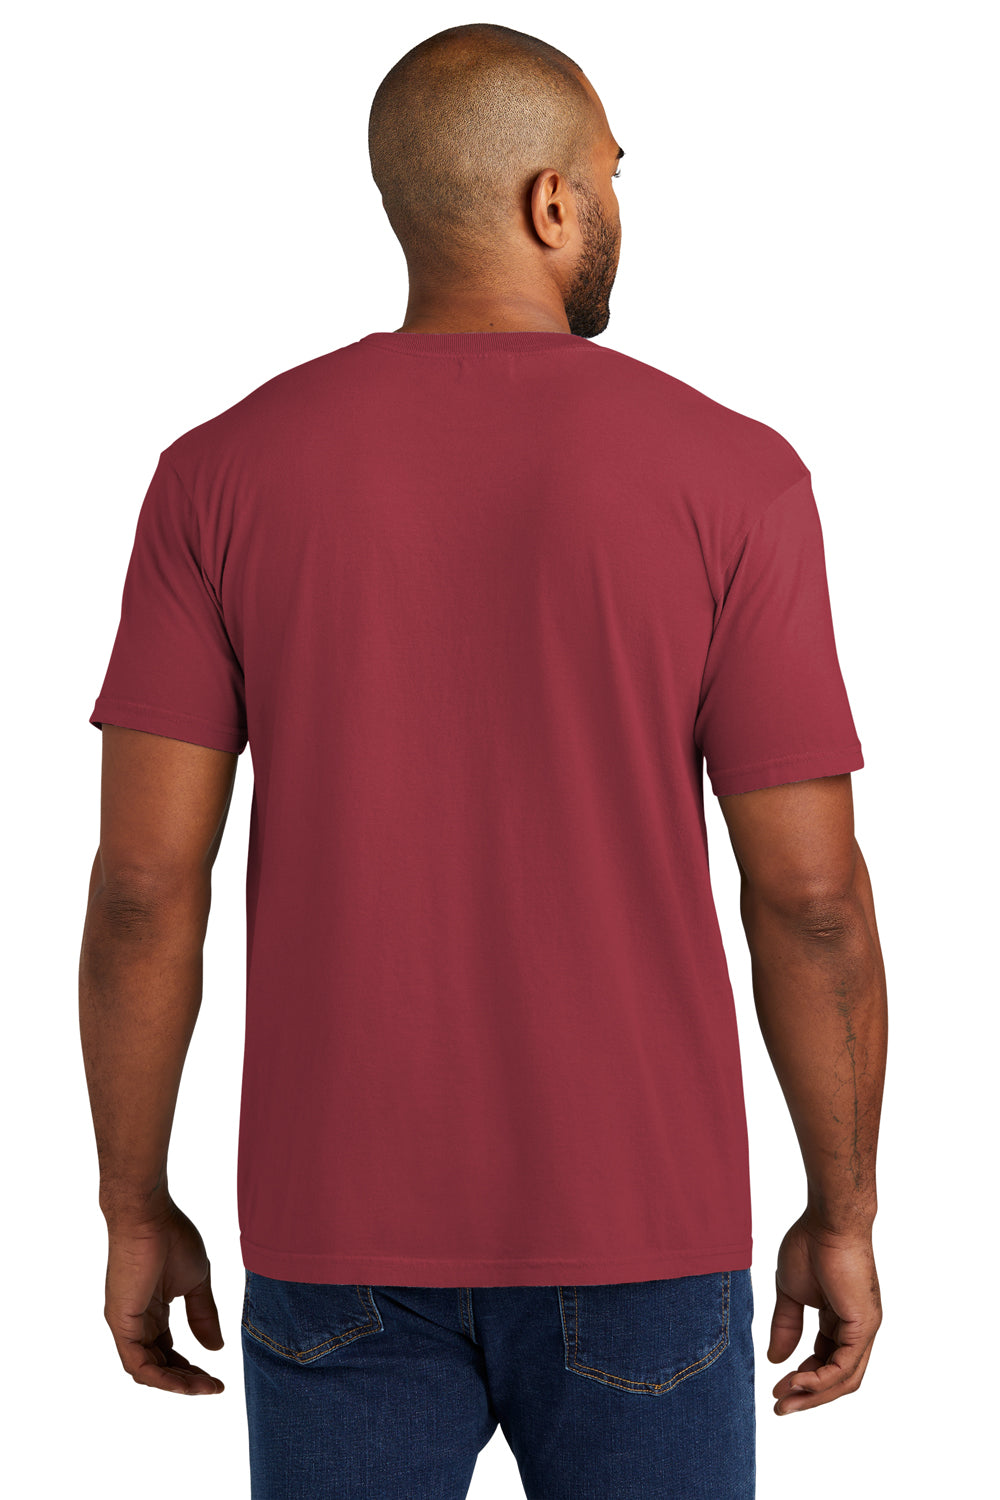 Comfort Colors Mens Short Sleeve Crewneck T-Shirt w/ Pocket Chili Red Back